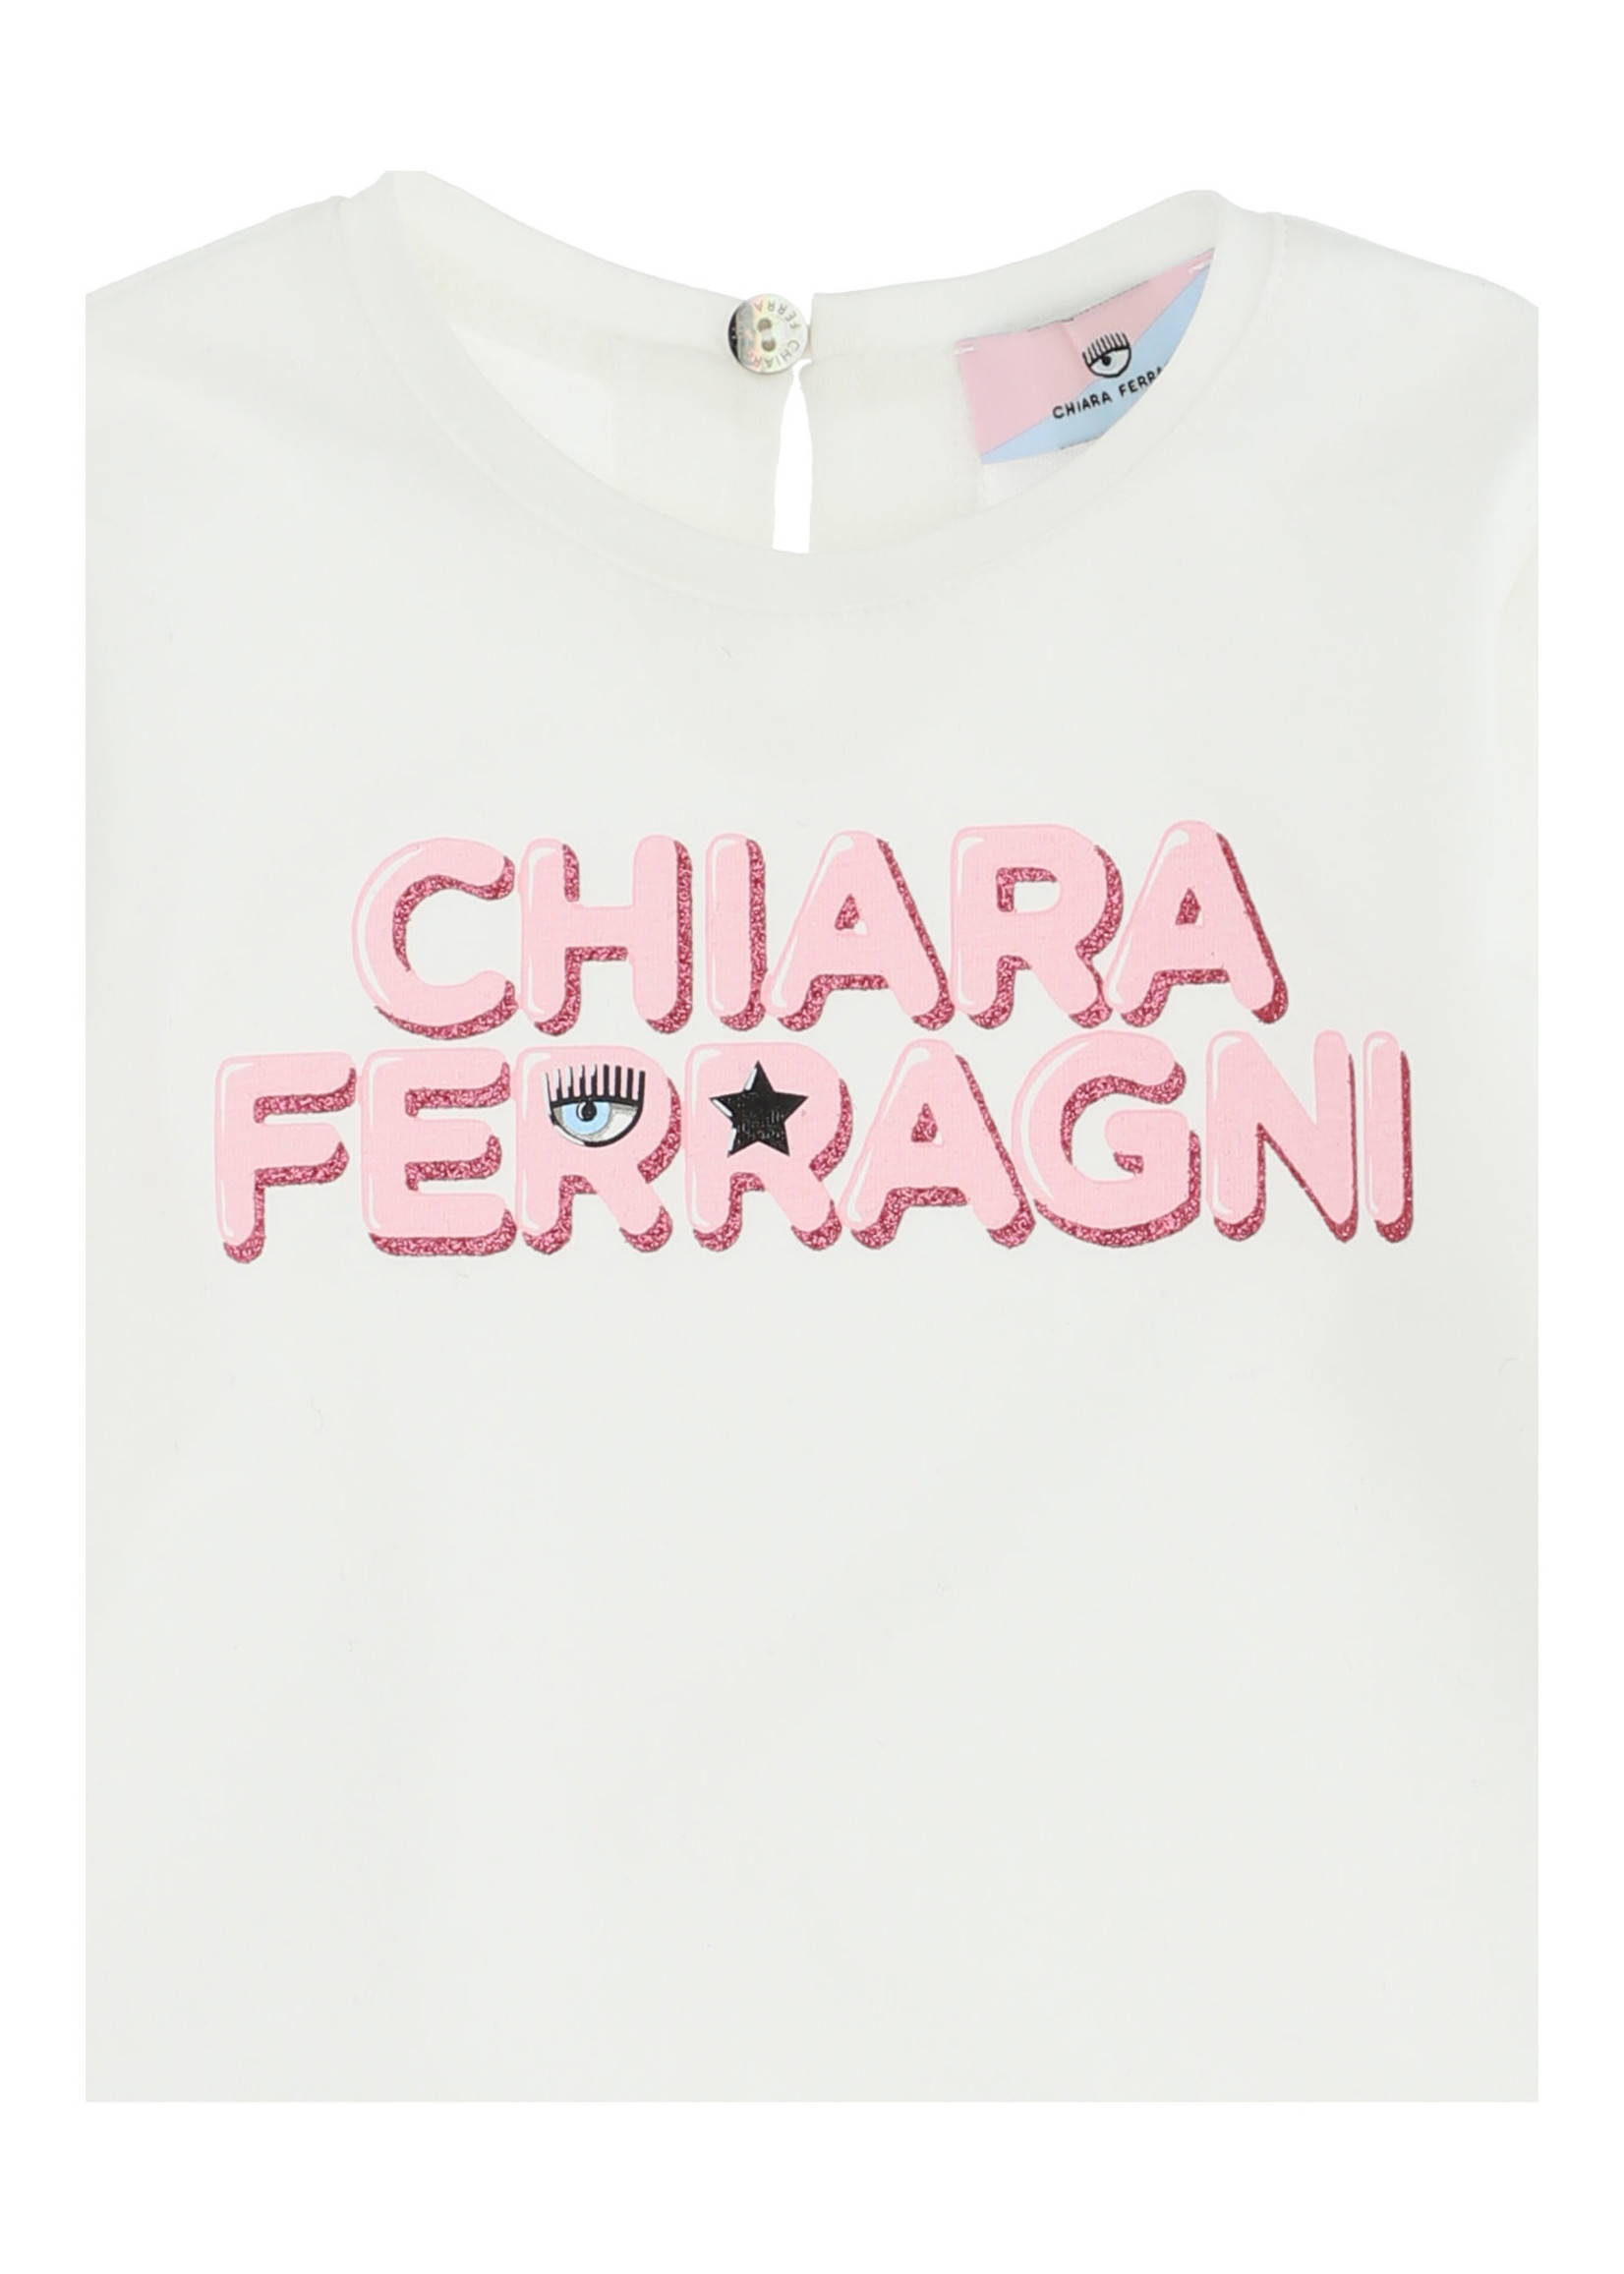 Chiara Ferragni by Monnalisa CF by MONNALISA tshirt offwhite logo - 538603